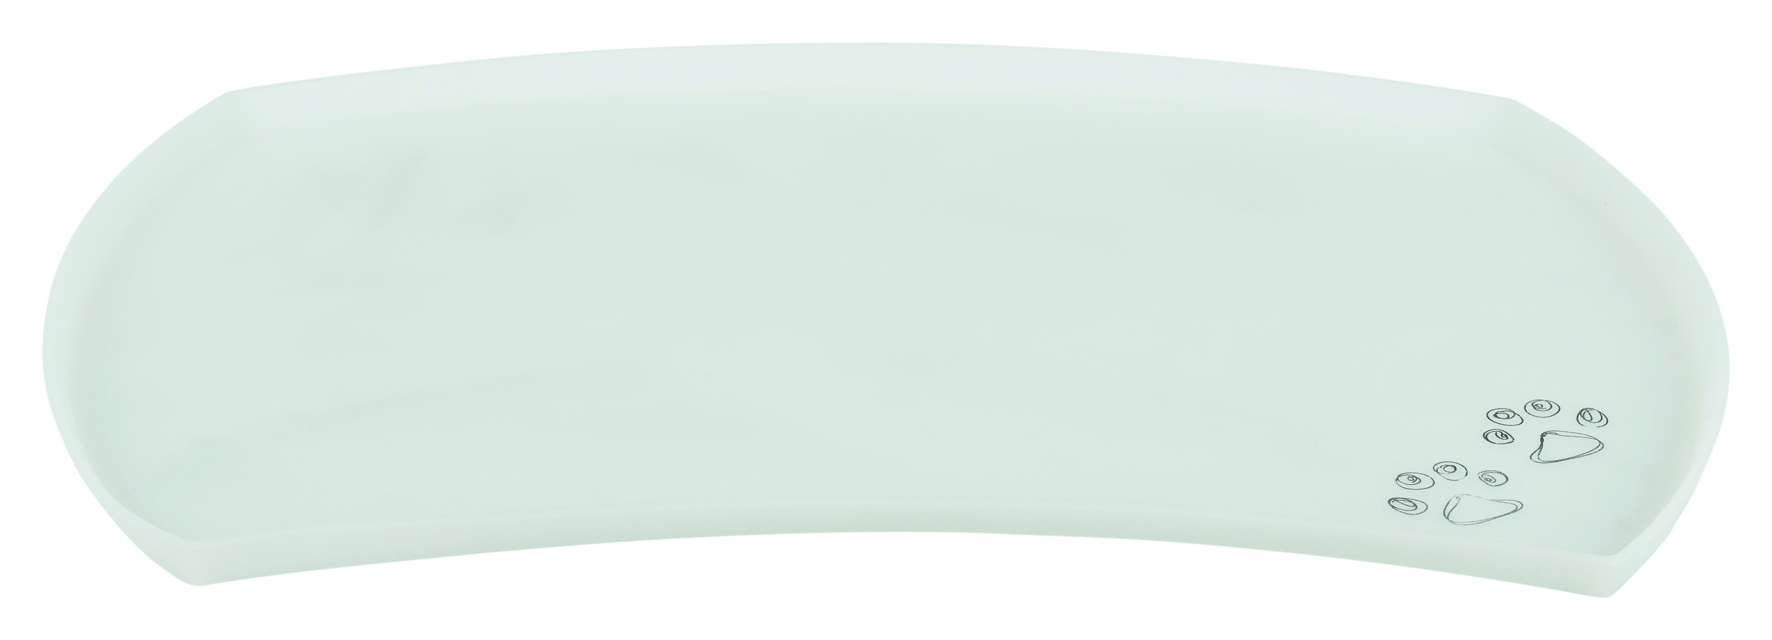 Trixie Napfunterlage 48 × 27 cm, transparent